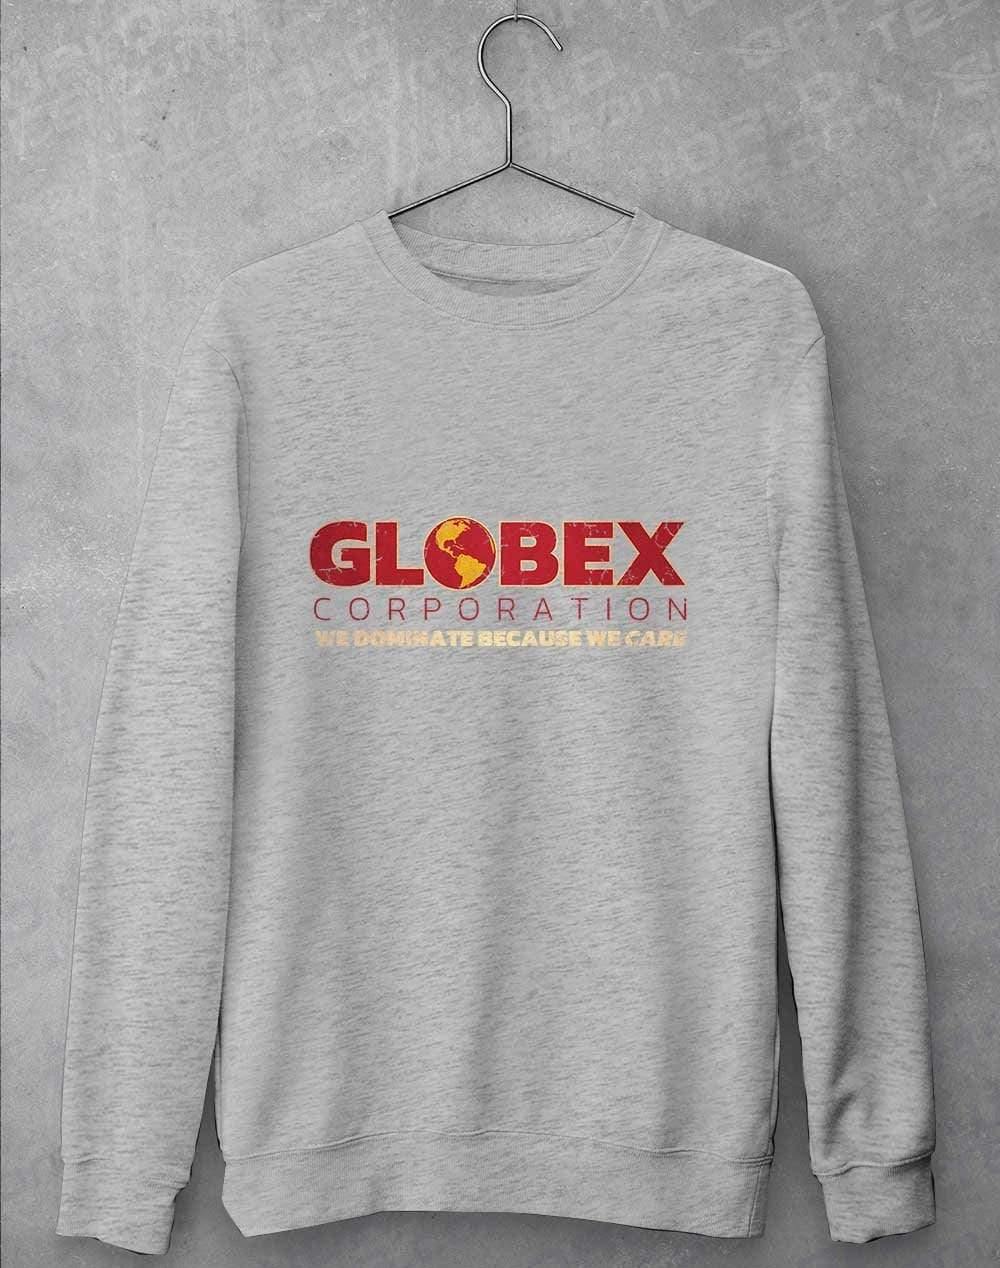 Globex Corporation Sweatshirt S / Heather Grey  - Off World Tees